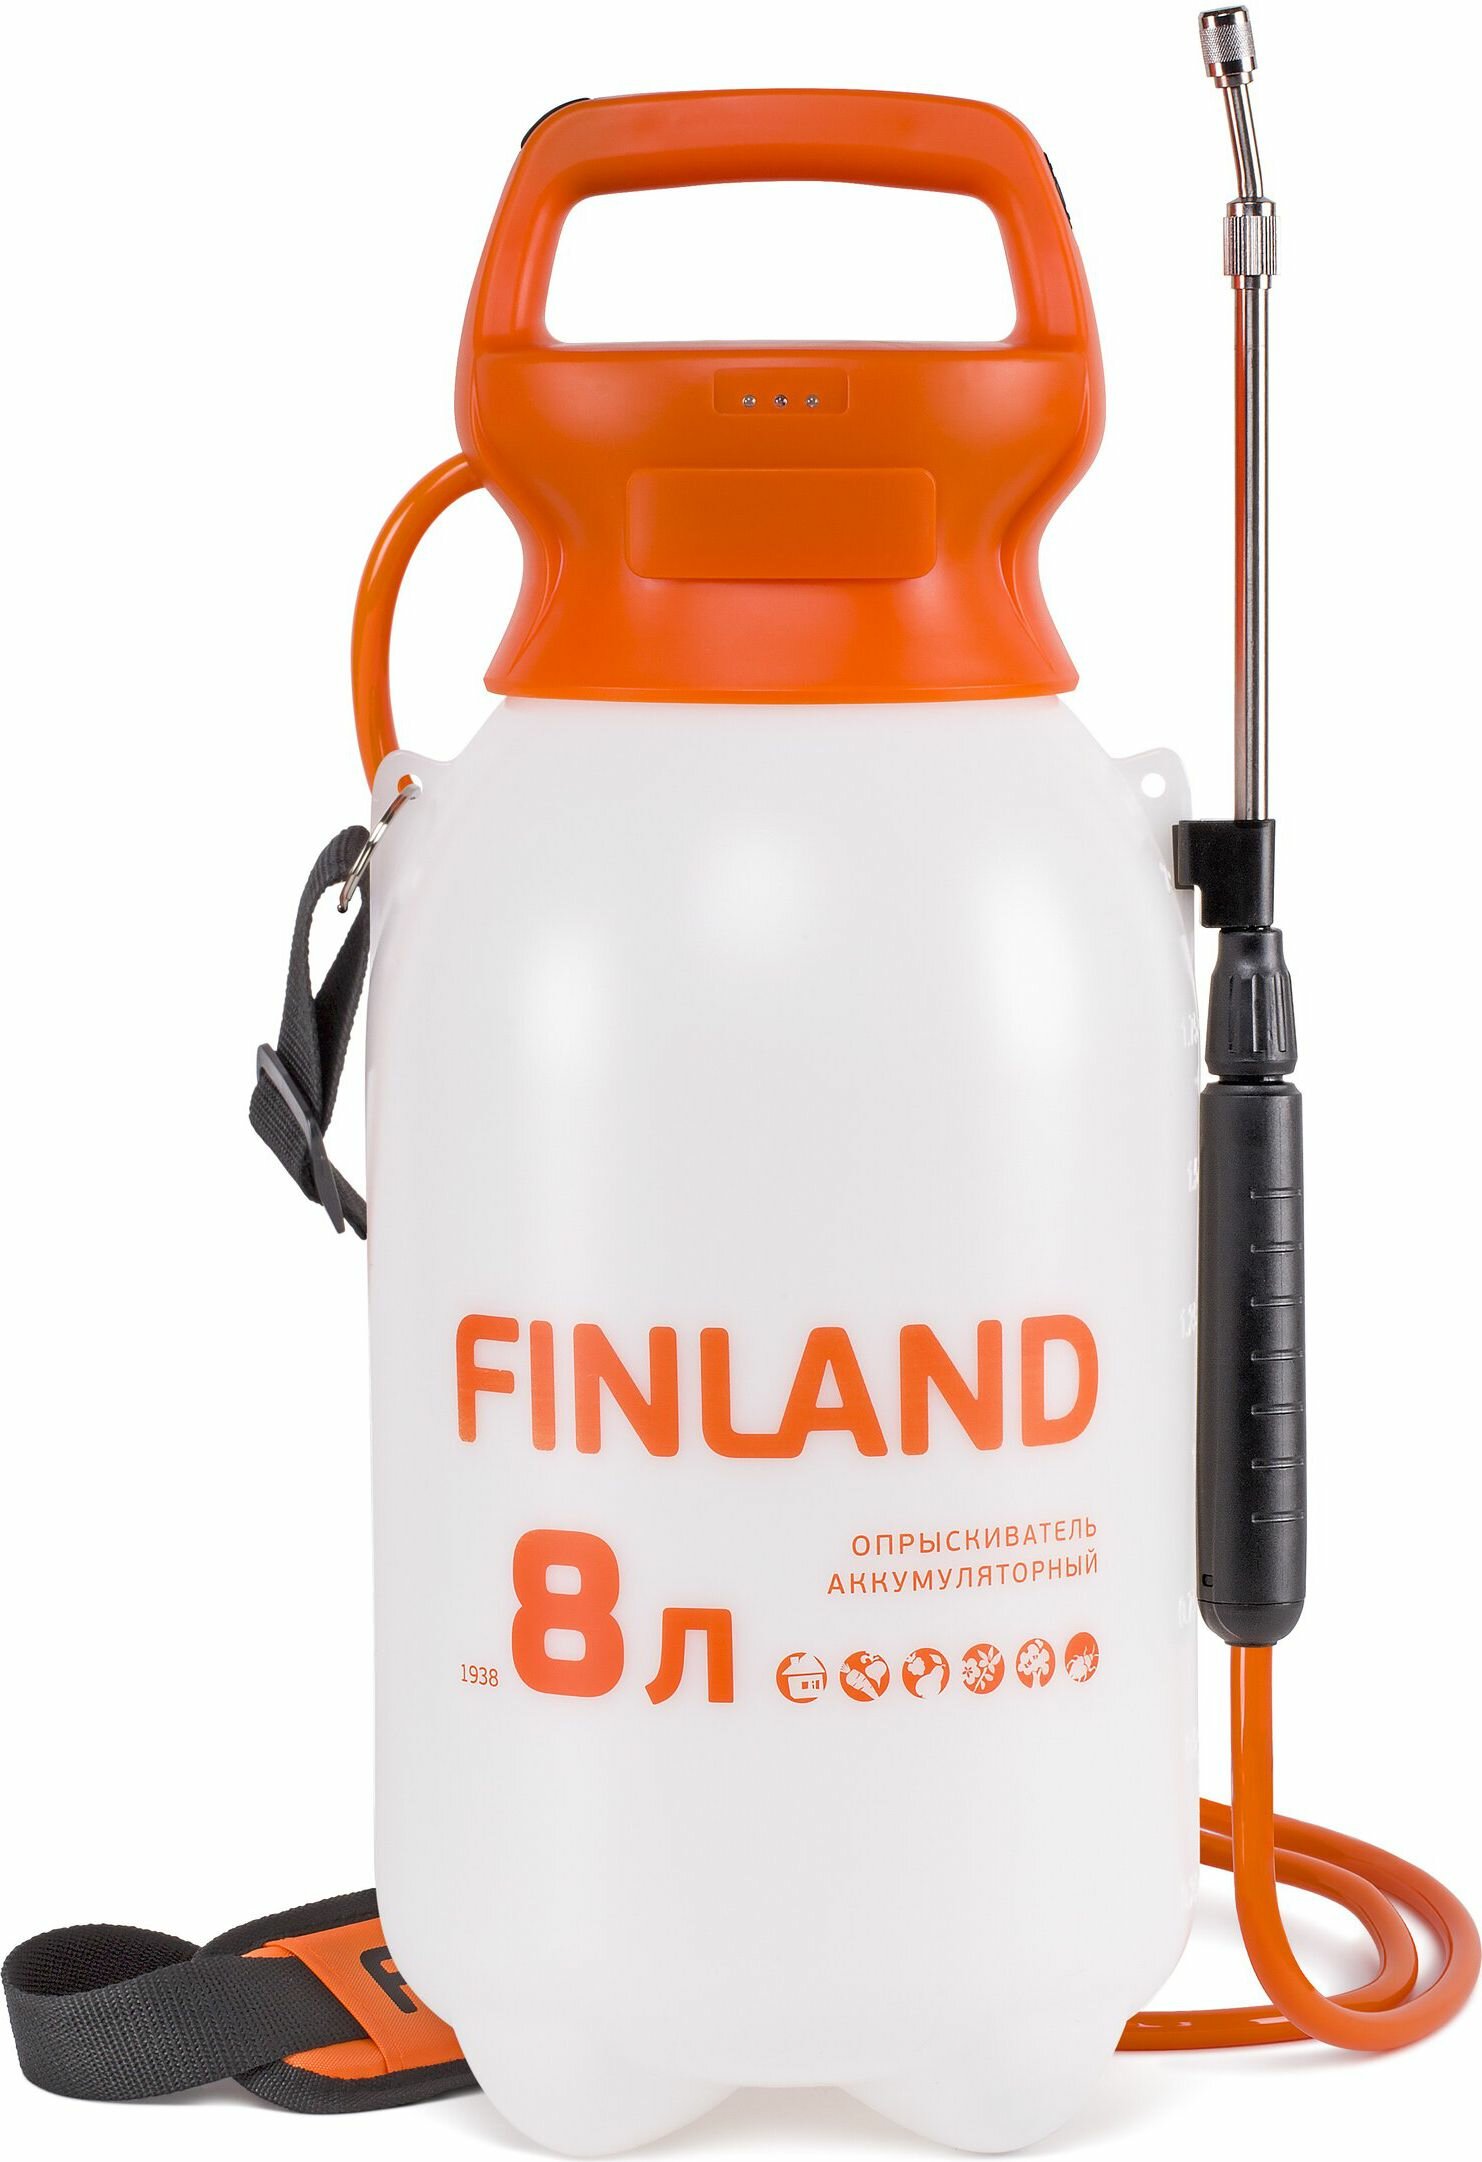 Аккумуляторный опрыскиватель Finland 1938 8 л